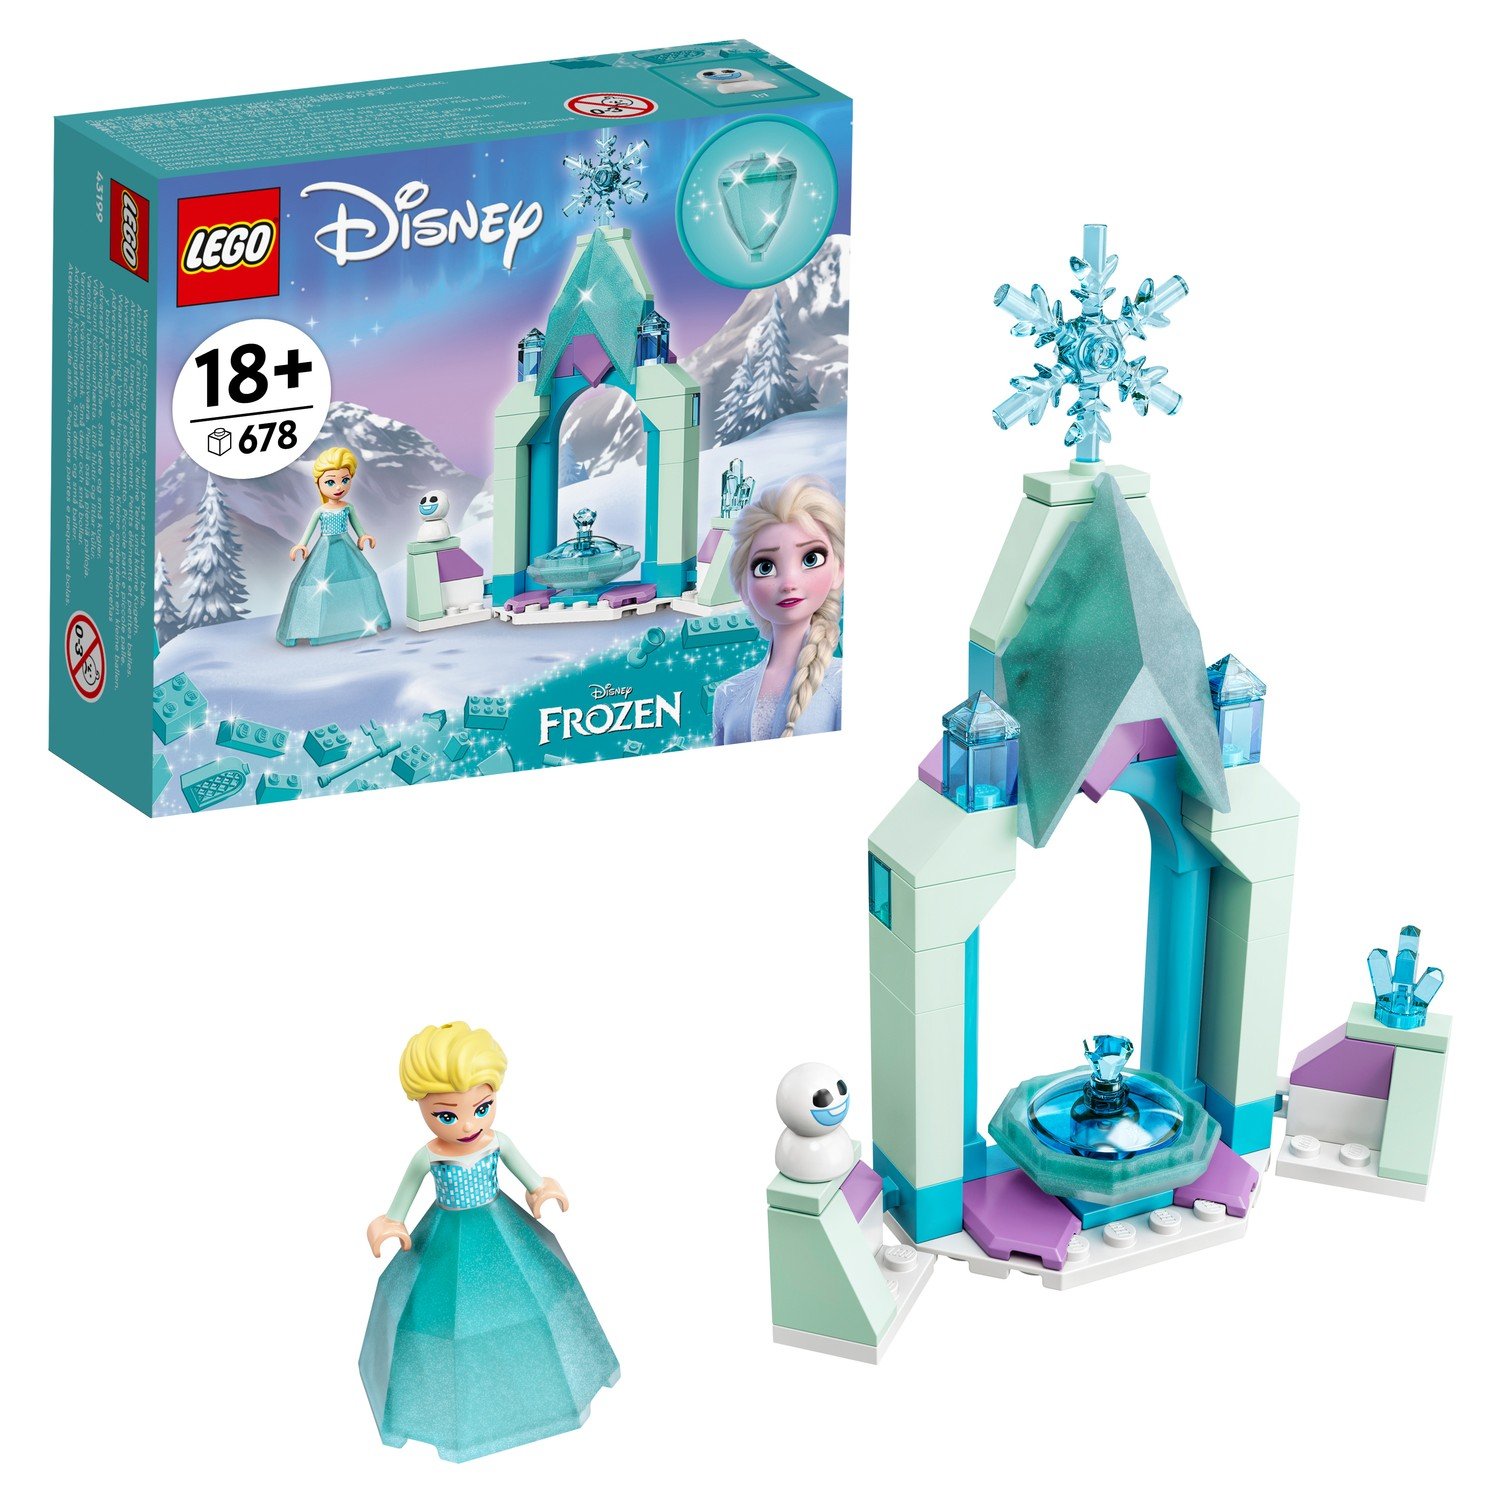 LEGO Disney Princess Frozen Двор замка Эльзы 43199 lego disney princess конструктор двор замка эльзы